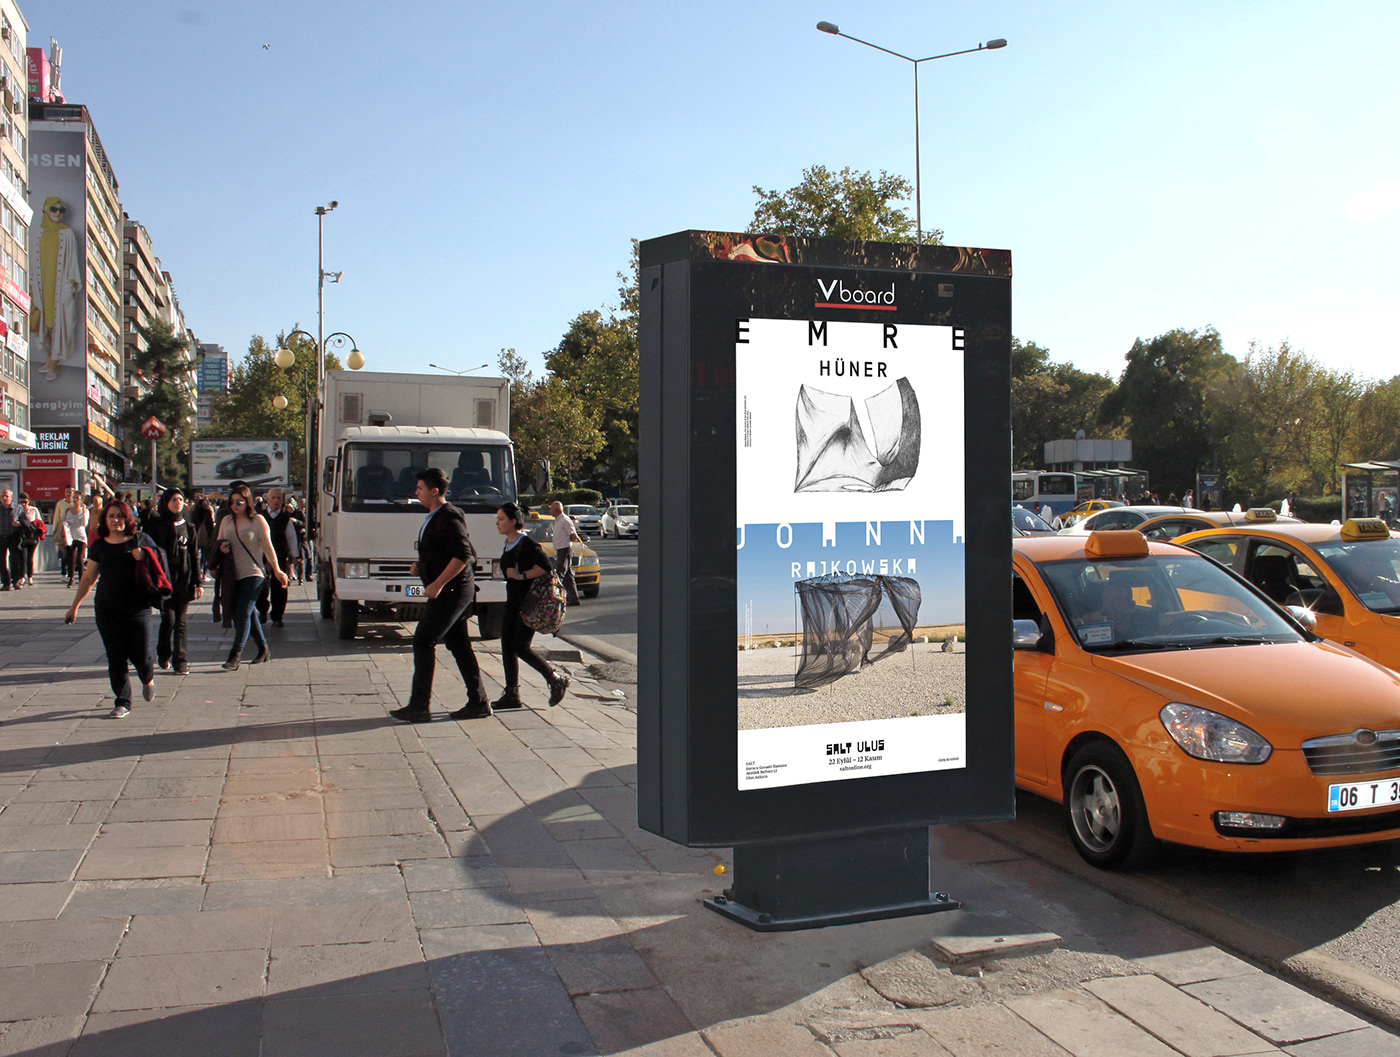 posterdesign identitydesign printdesign Salt istanbul Turkey outdoorcampaign campaign poster billboard